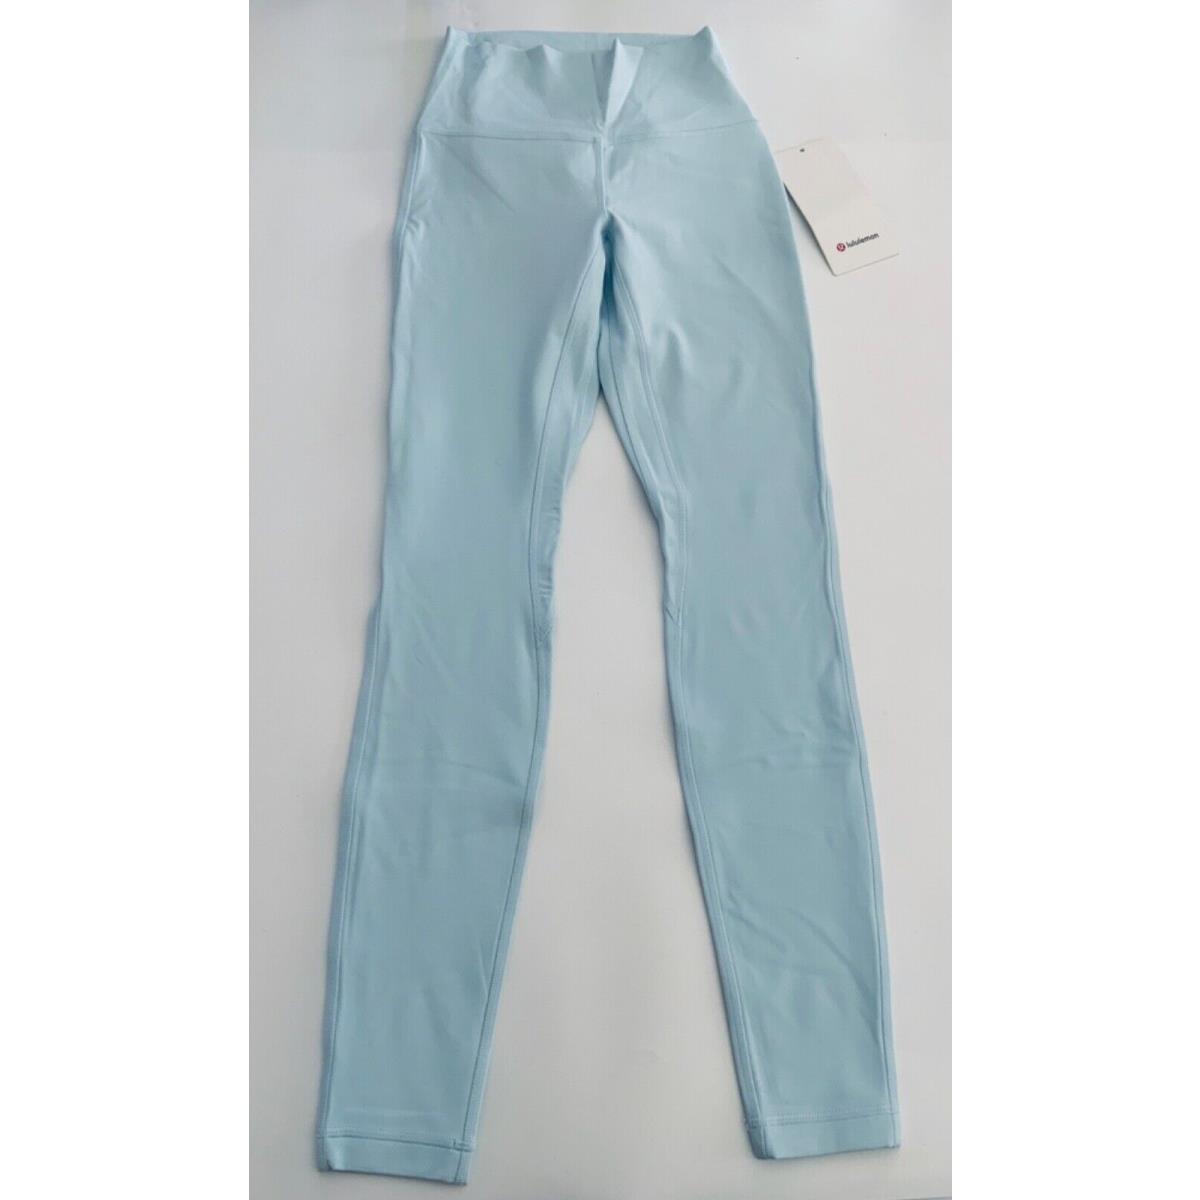 Lululemon Women s Align Pant 28 Length Nulu LW5CTIS Pwbe Light Blue Size 4